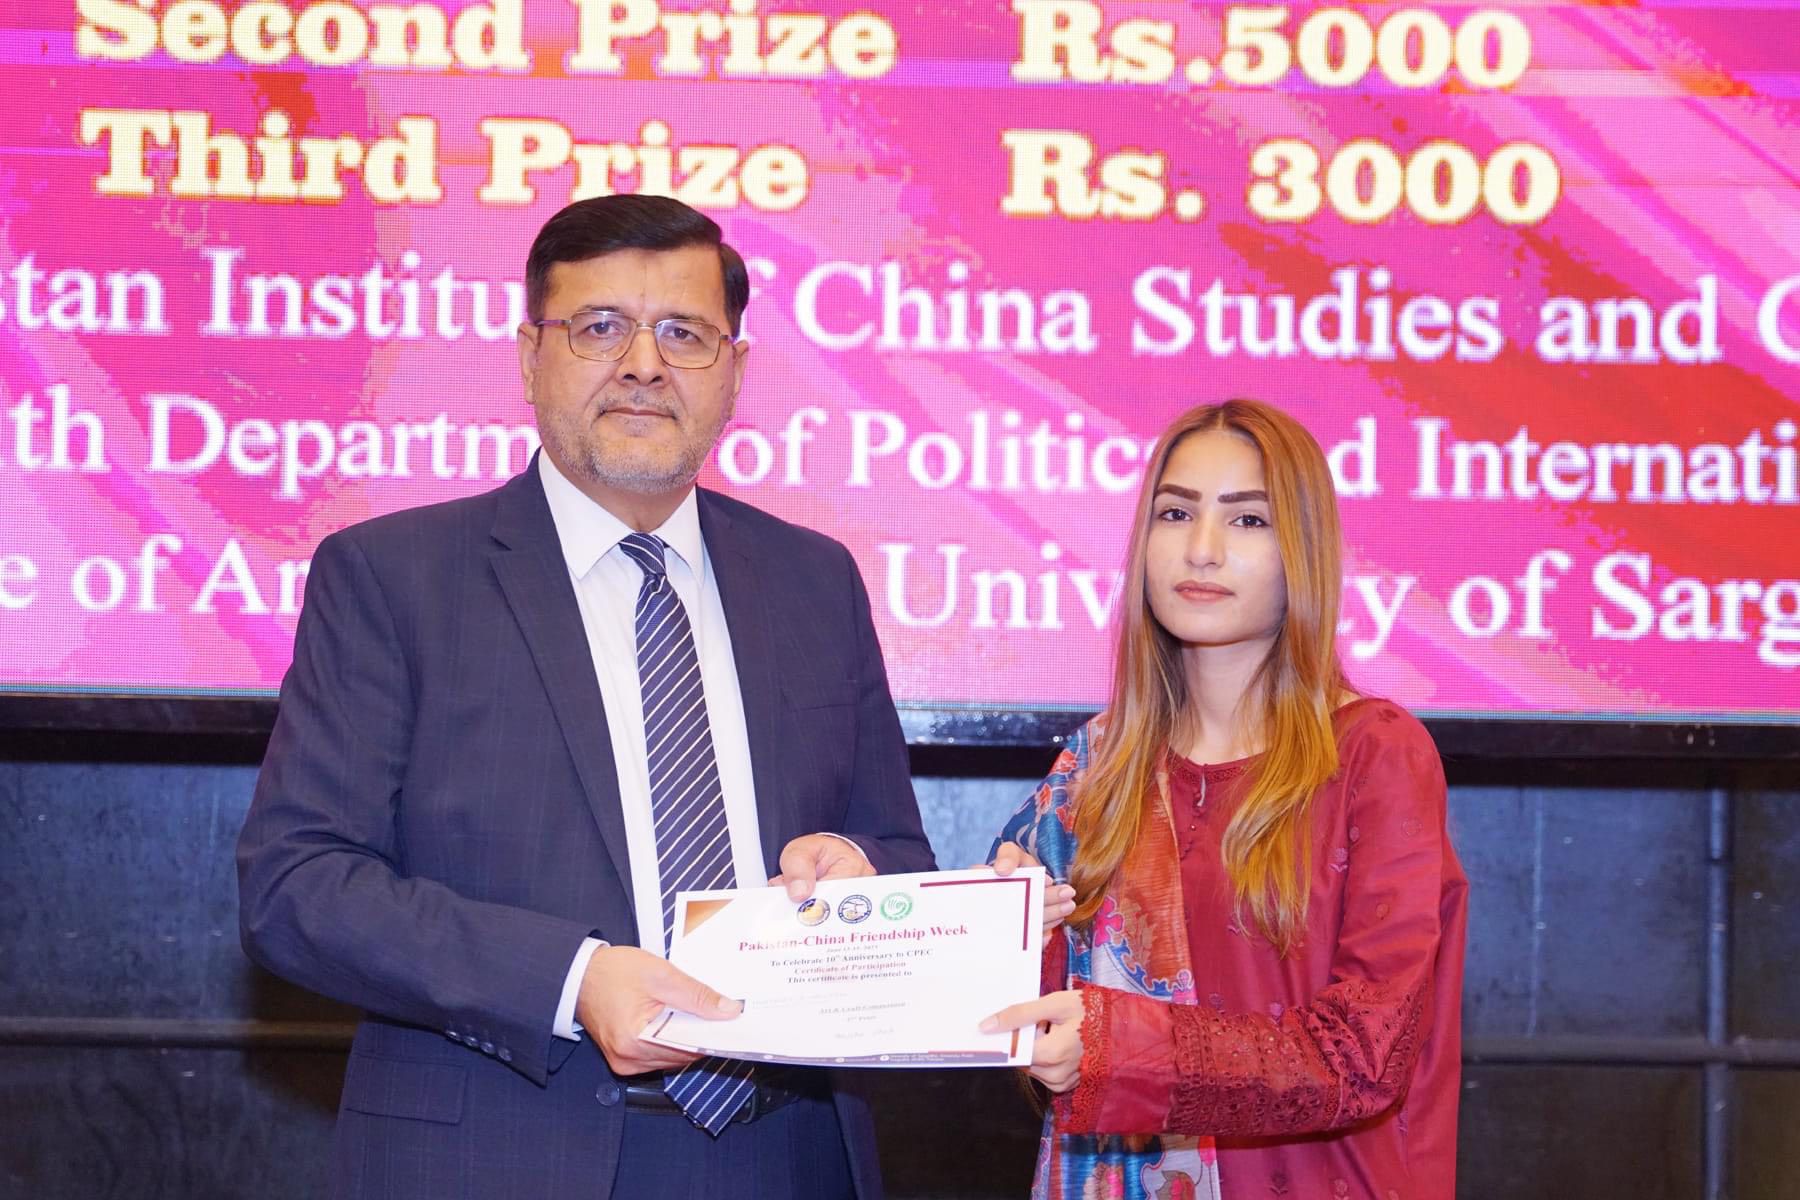 University of Sargodha celebrates decade of CPEC